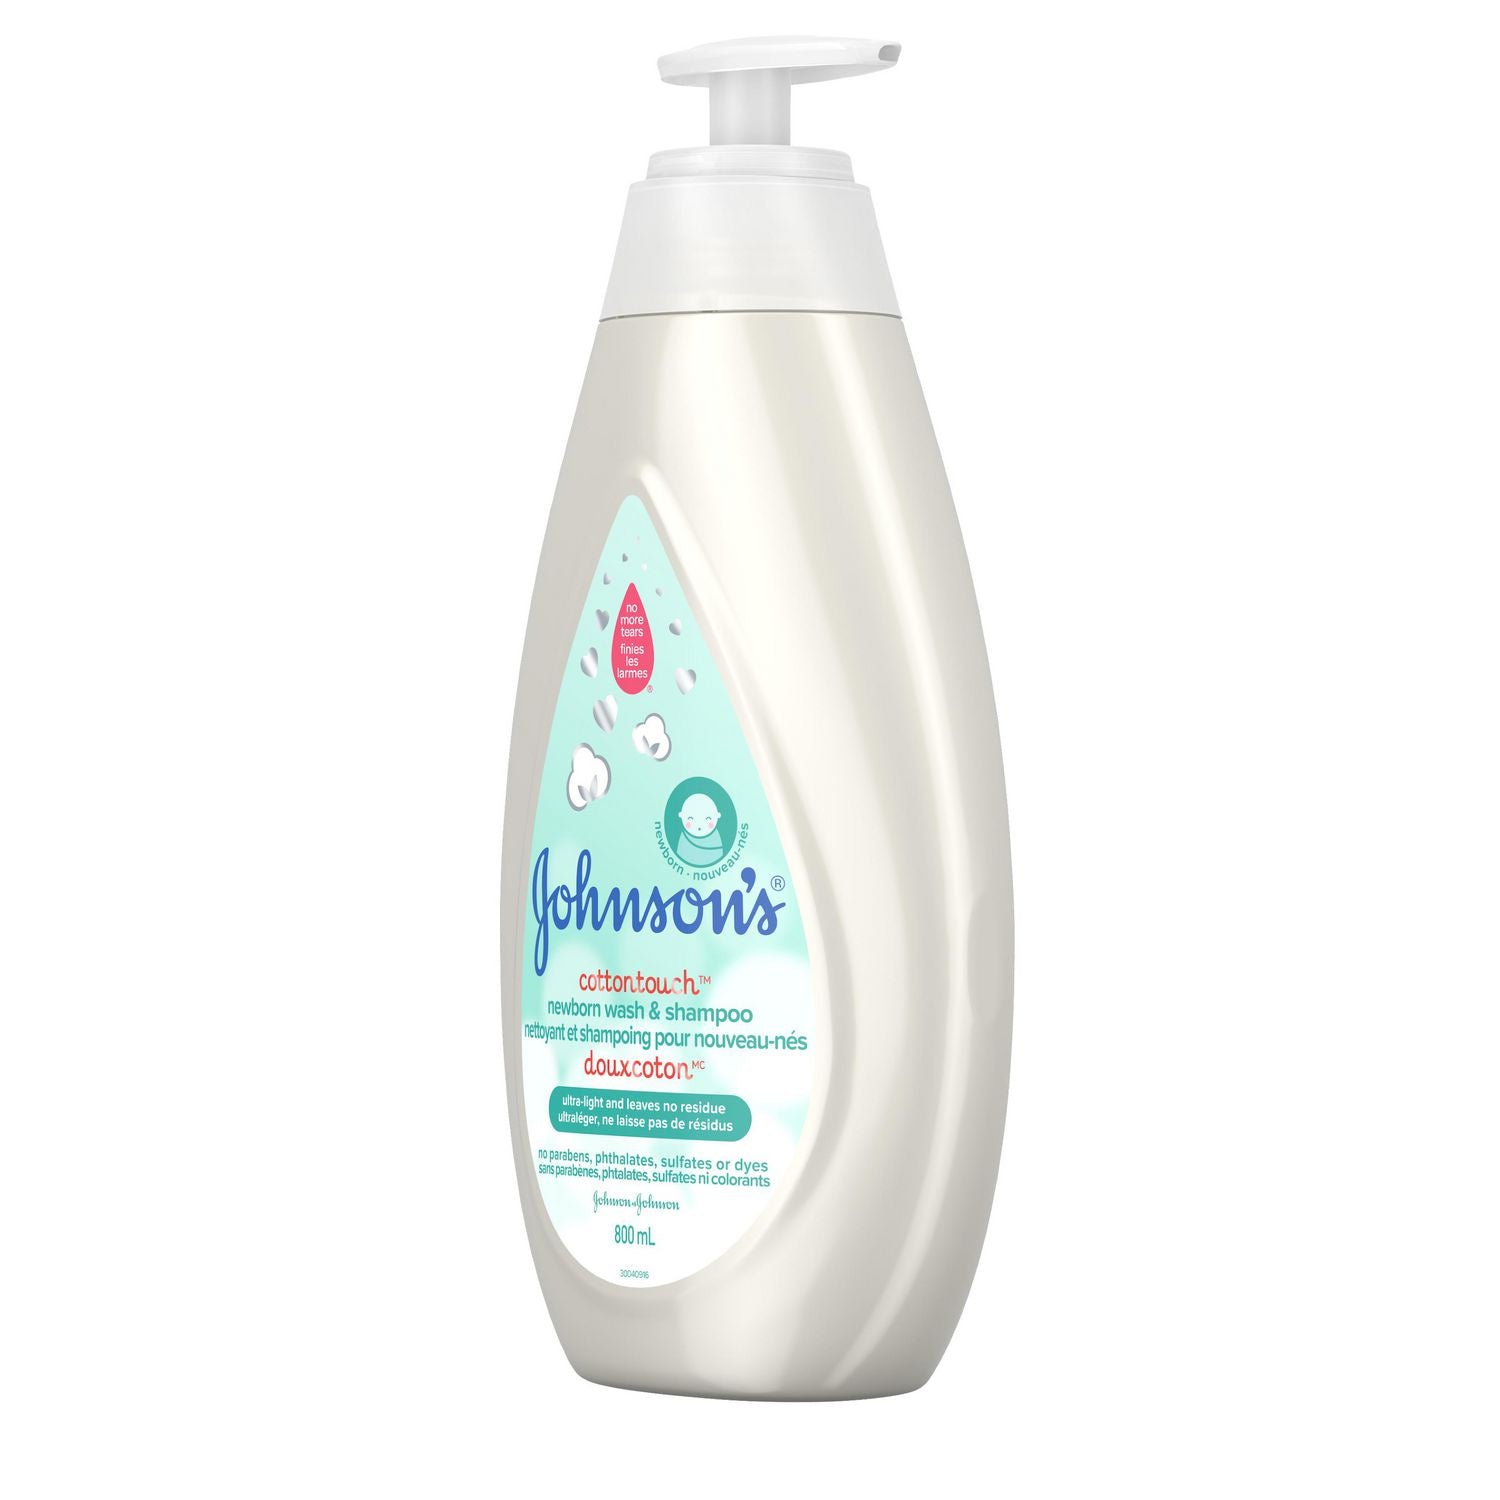 Johnson's Baby, Cottontouch, Newborn Wash & Shampoo, 800ml